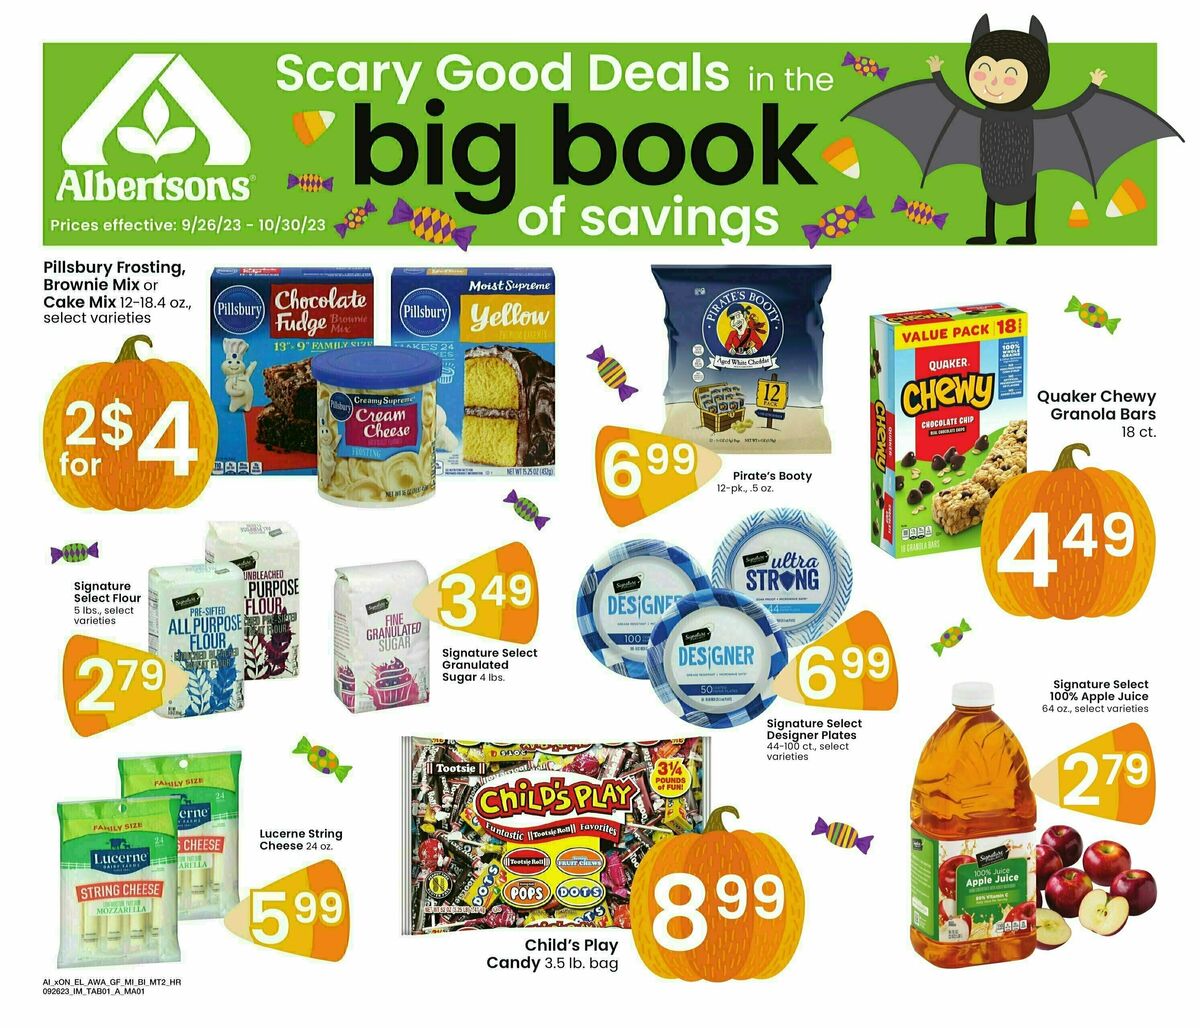 Albertsons Big Book of Savings Weekly Ad from September 26